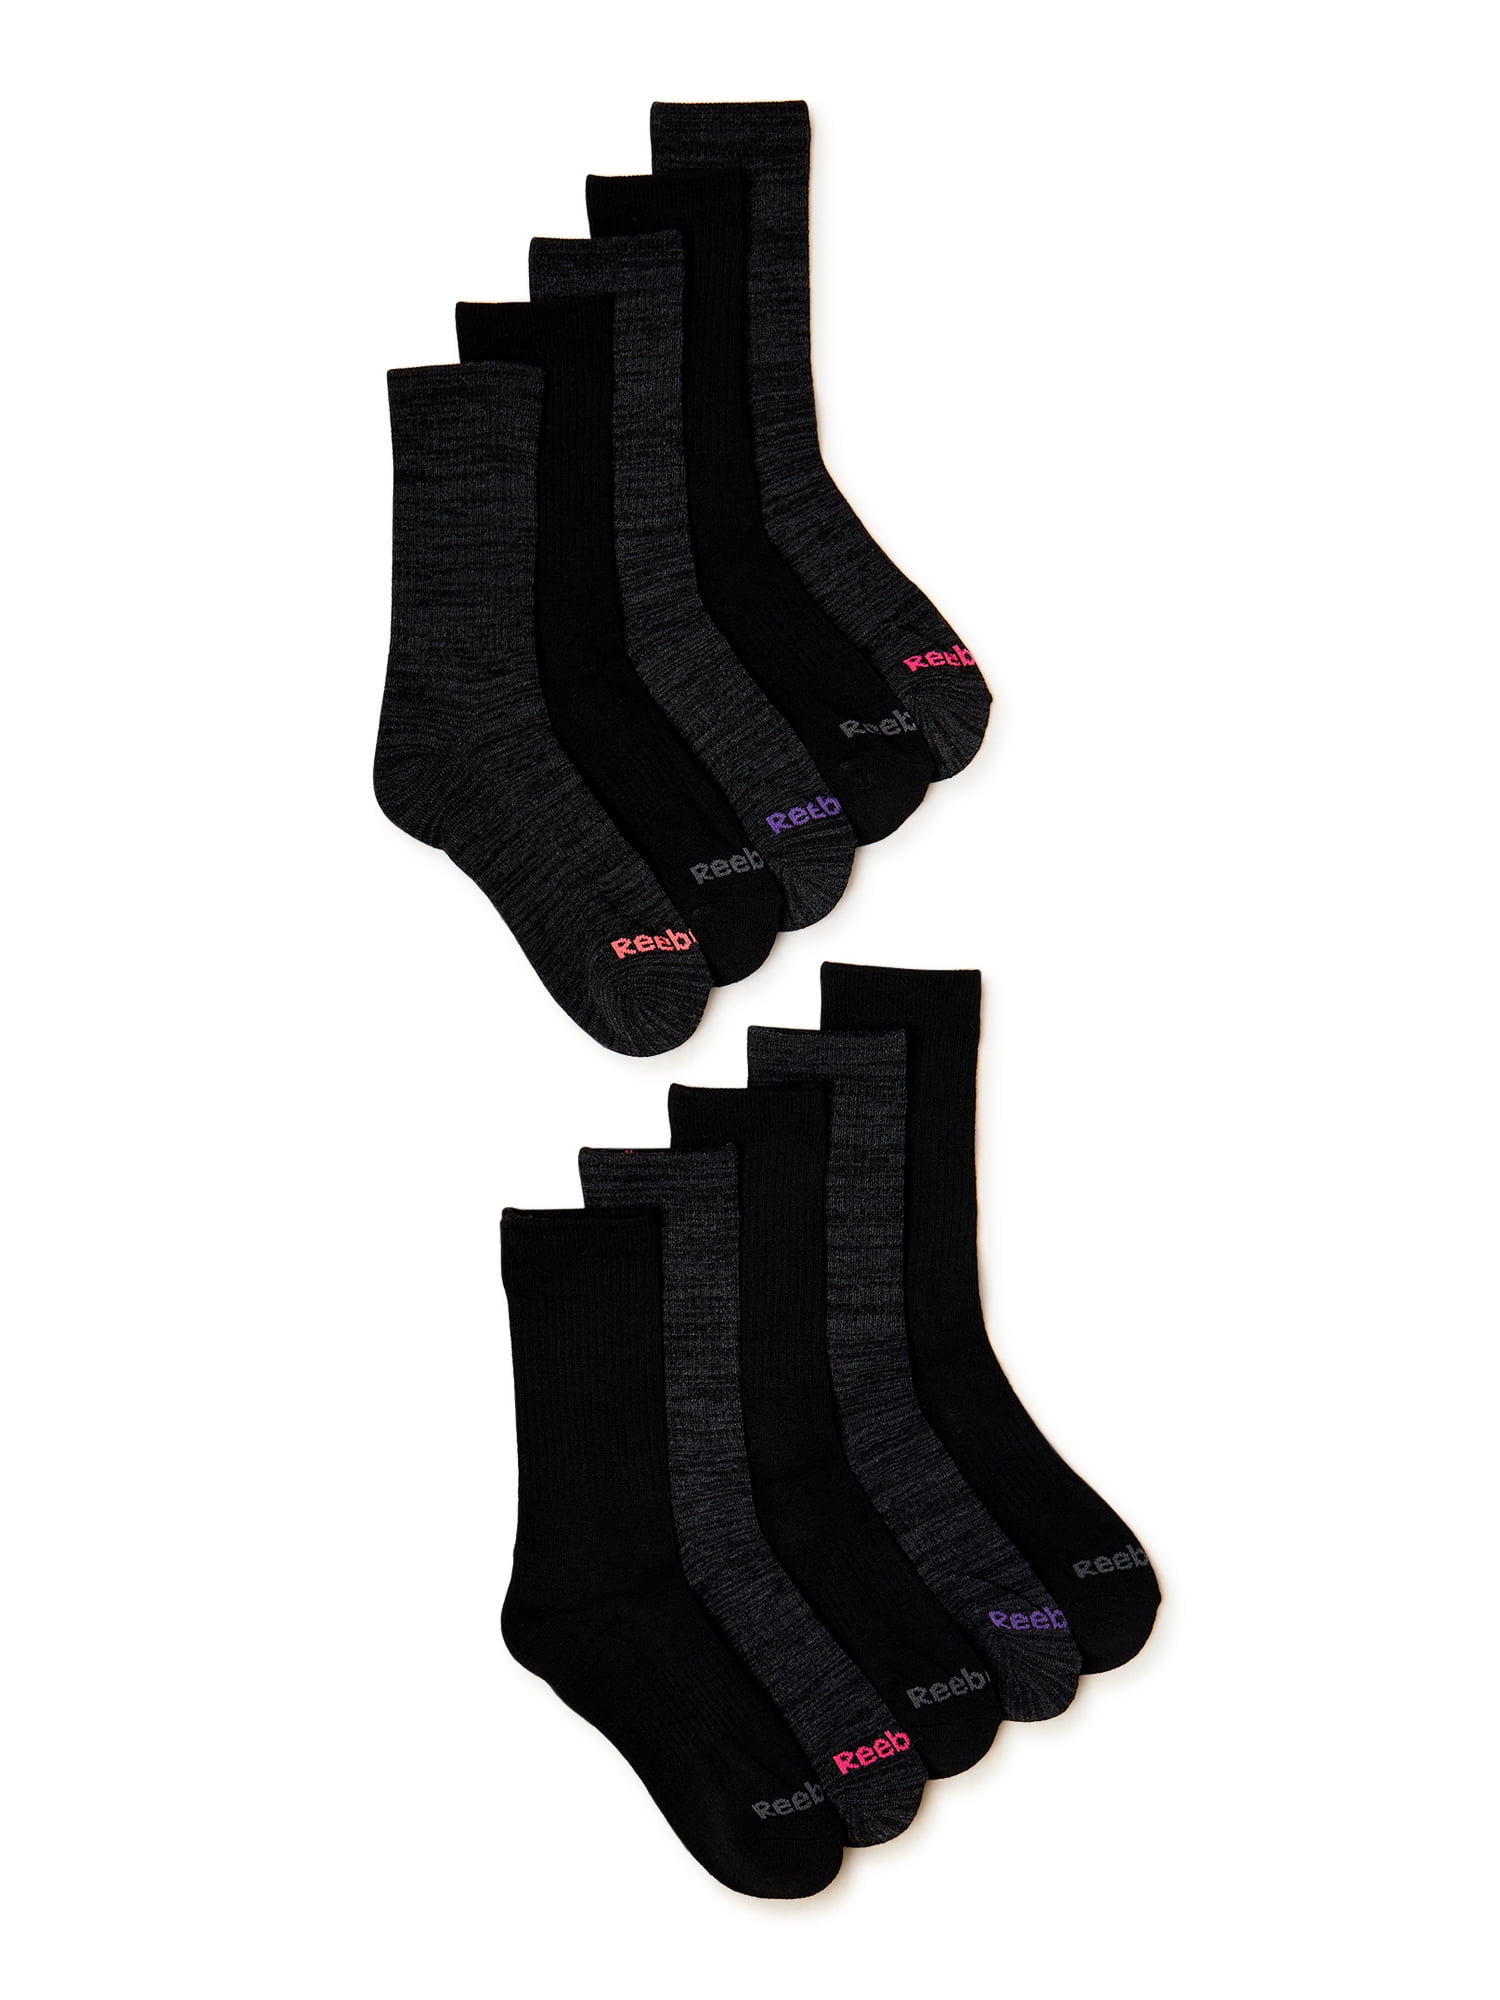 Reebok Women's Pro Series Cushion Crew Socks, 10-Pack